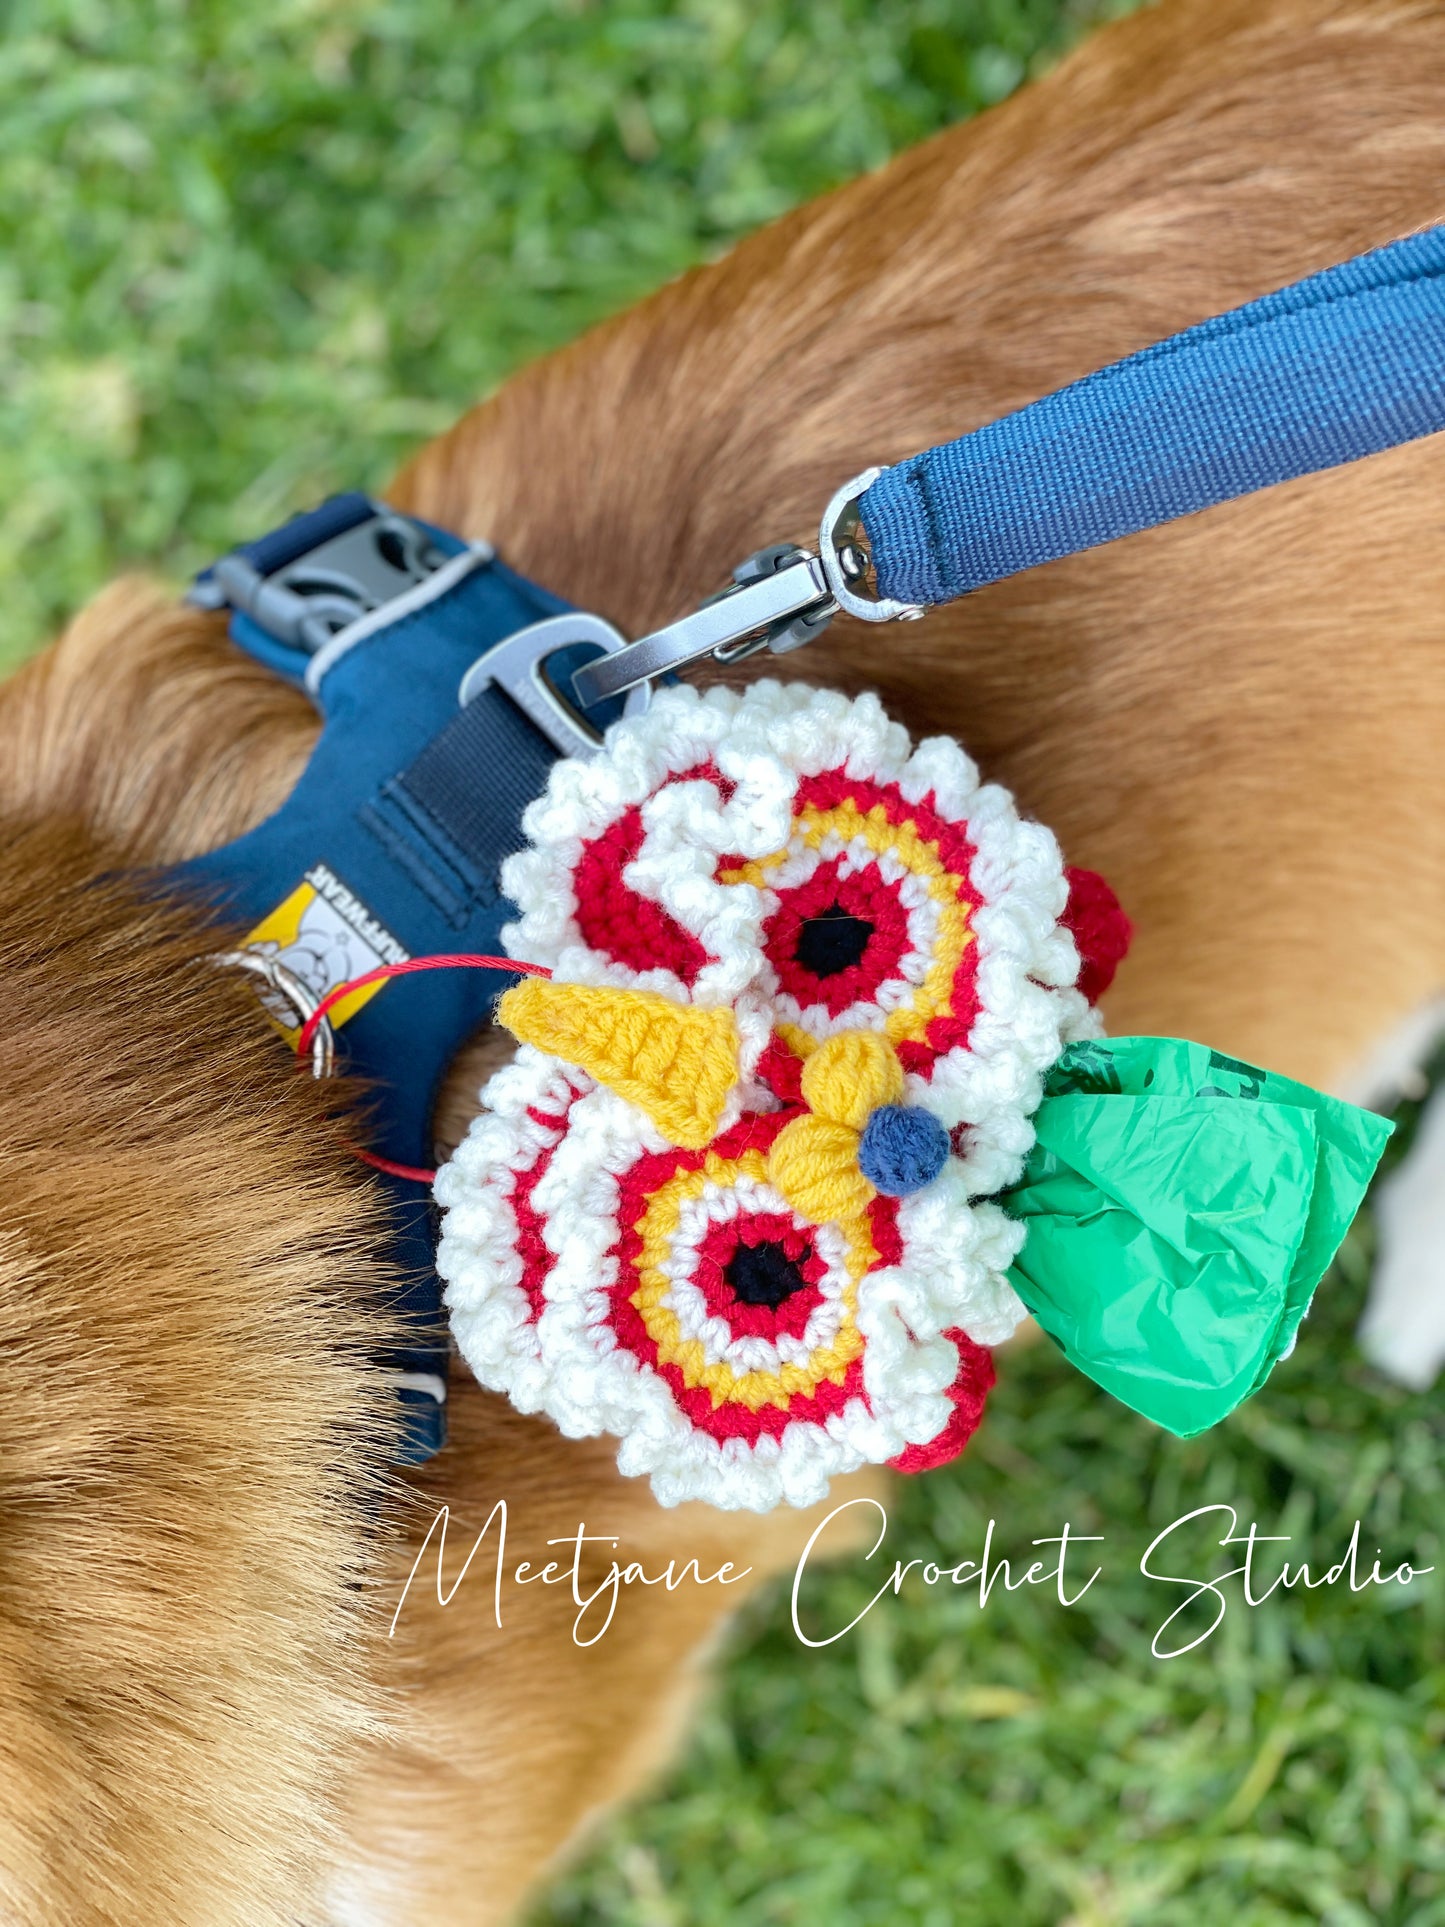 Crochet pet【NEW YEAR EDITION】Crochet poop bag holder